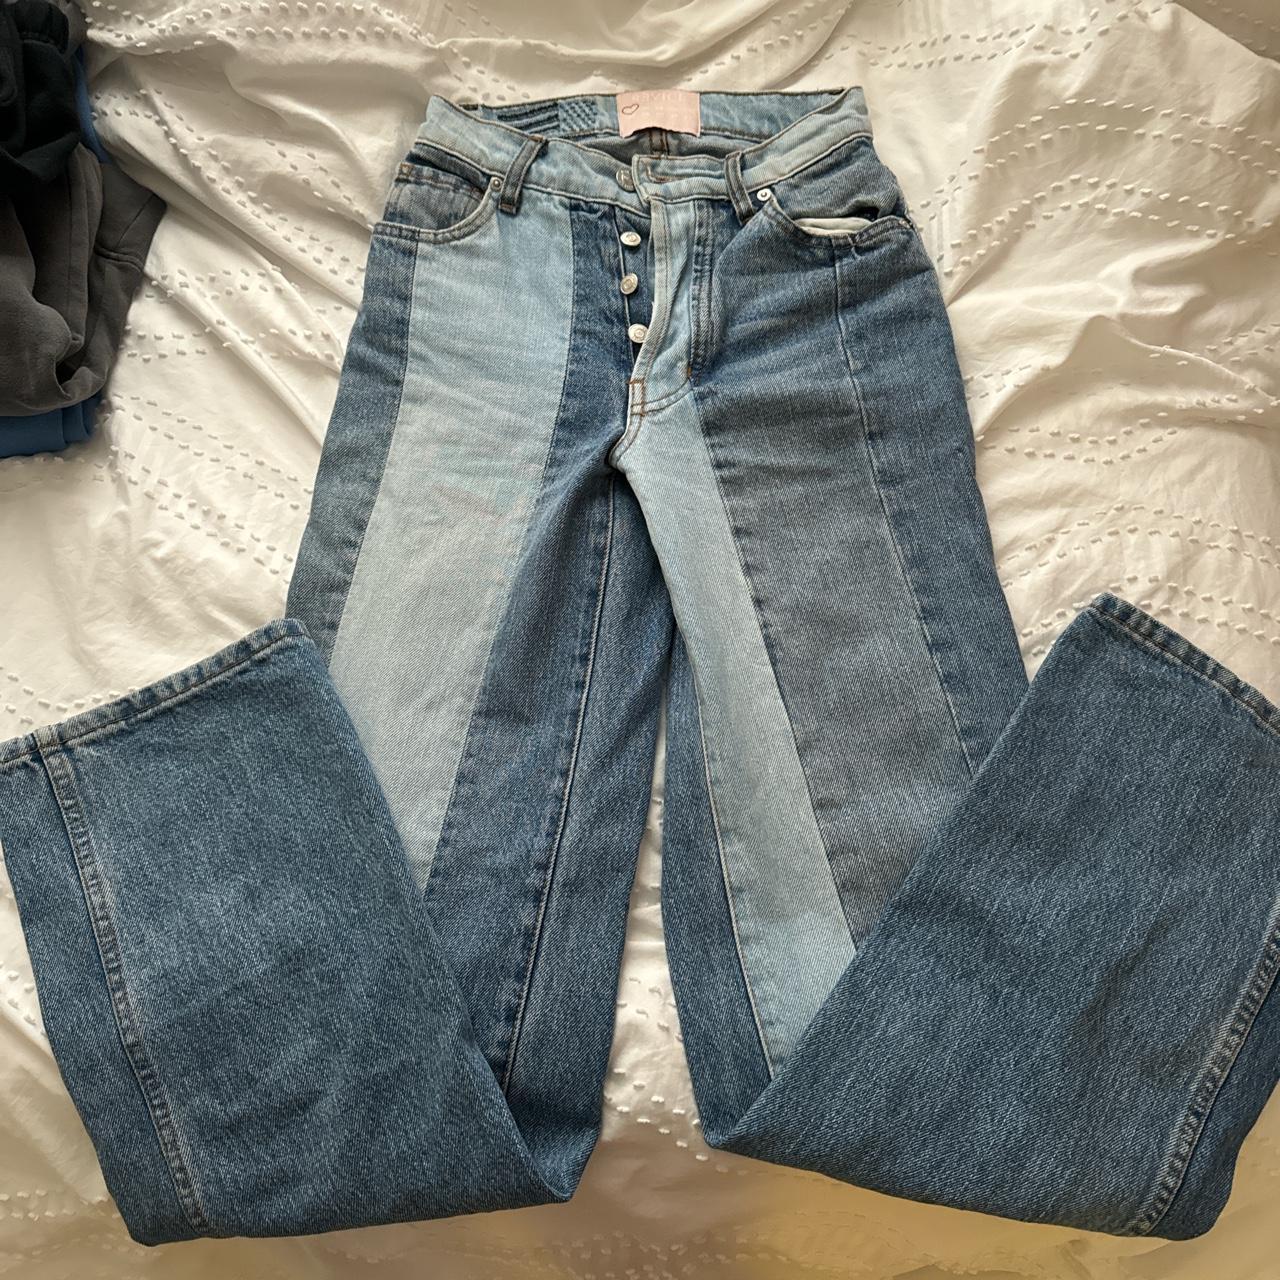 Revive denim jeans very fitting - Depop